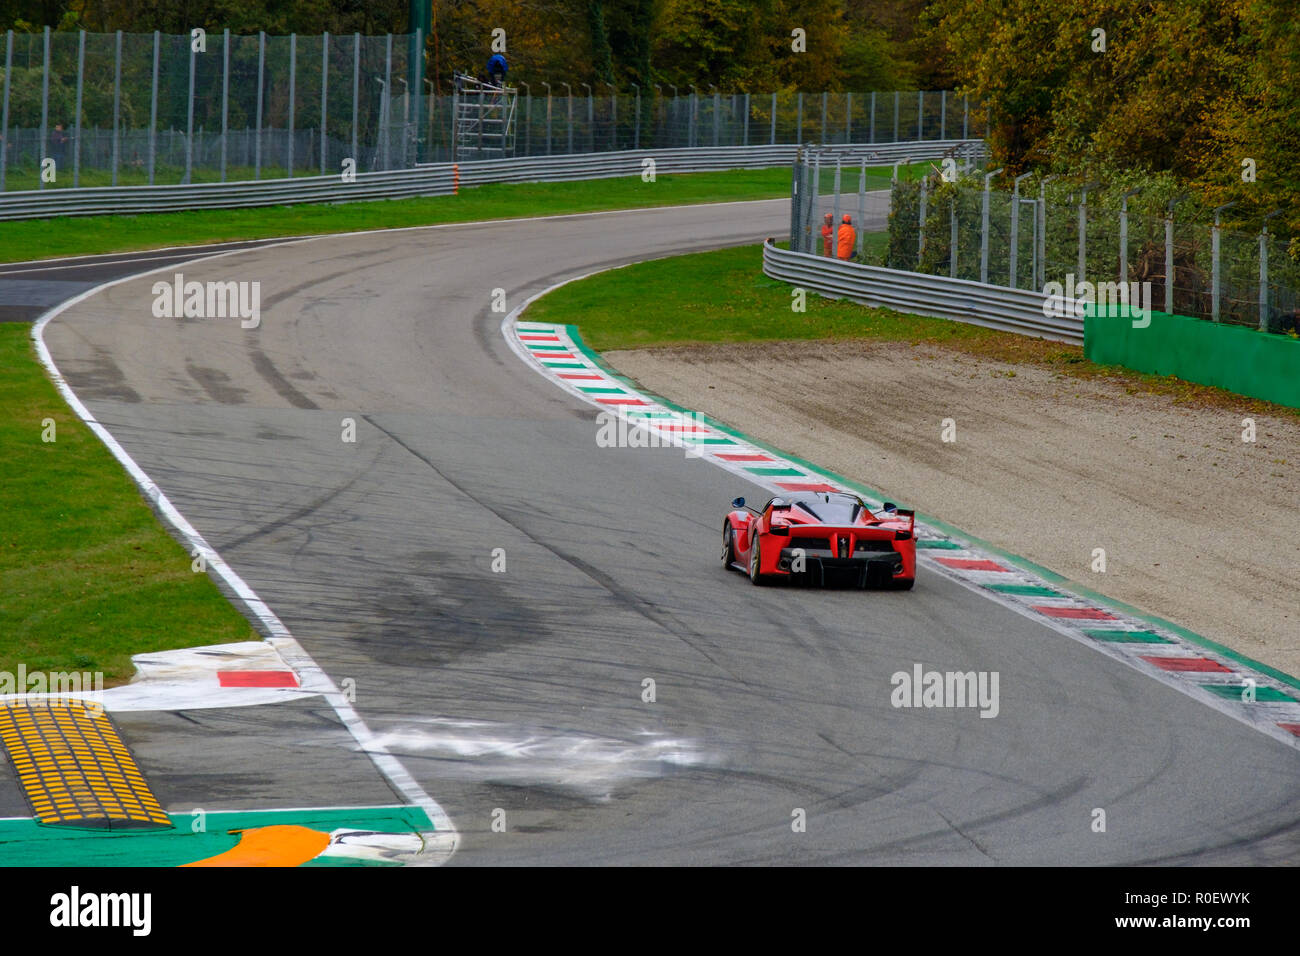 Monza, Italy. 4th Nov 2018. Ferrari world championship 2018, final race FXX: Monza Eni Circuit Credit: Italian Landscapes/Alamy Live News Stock Photo